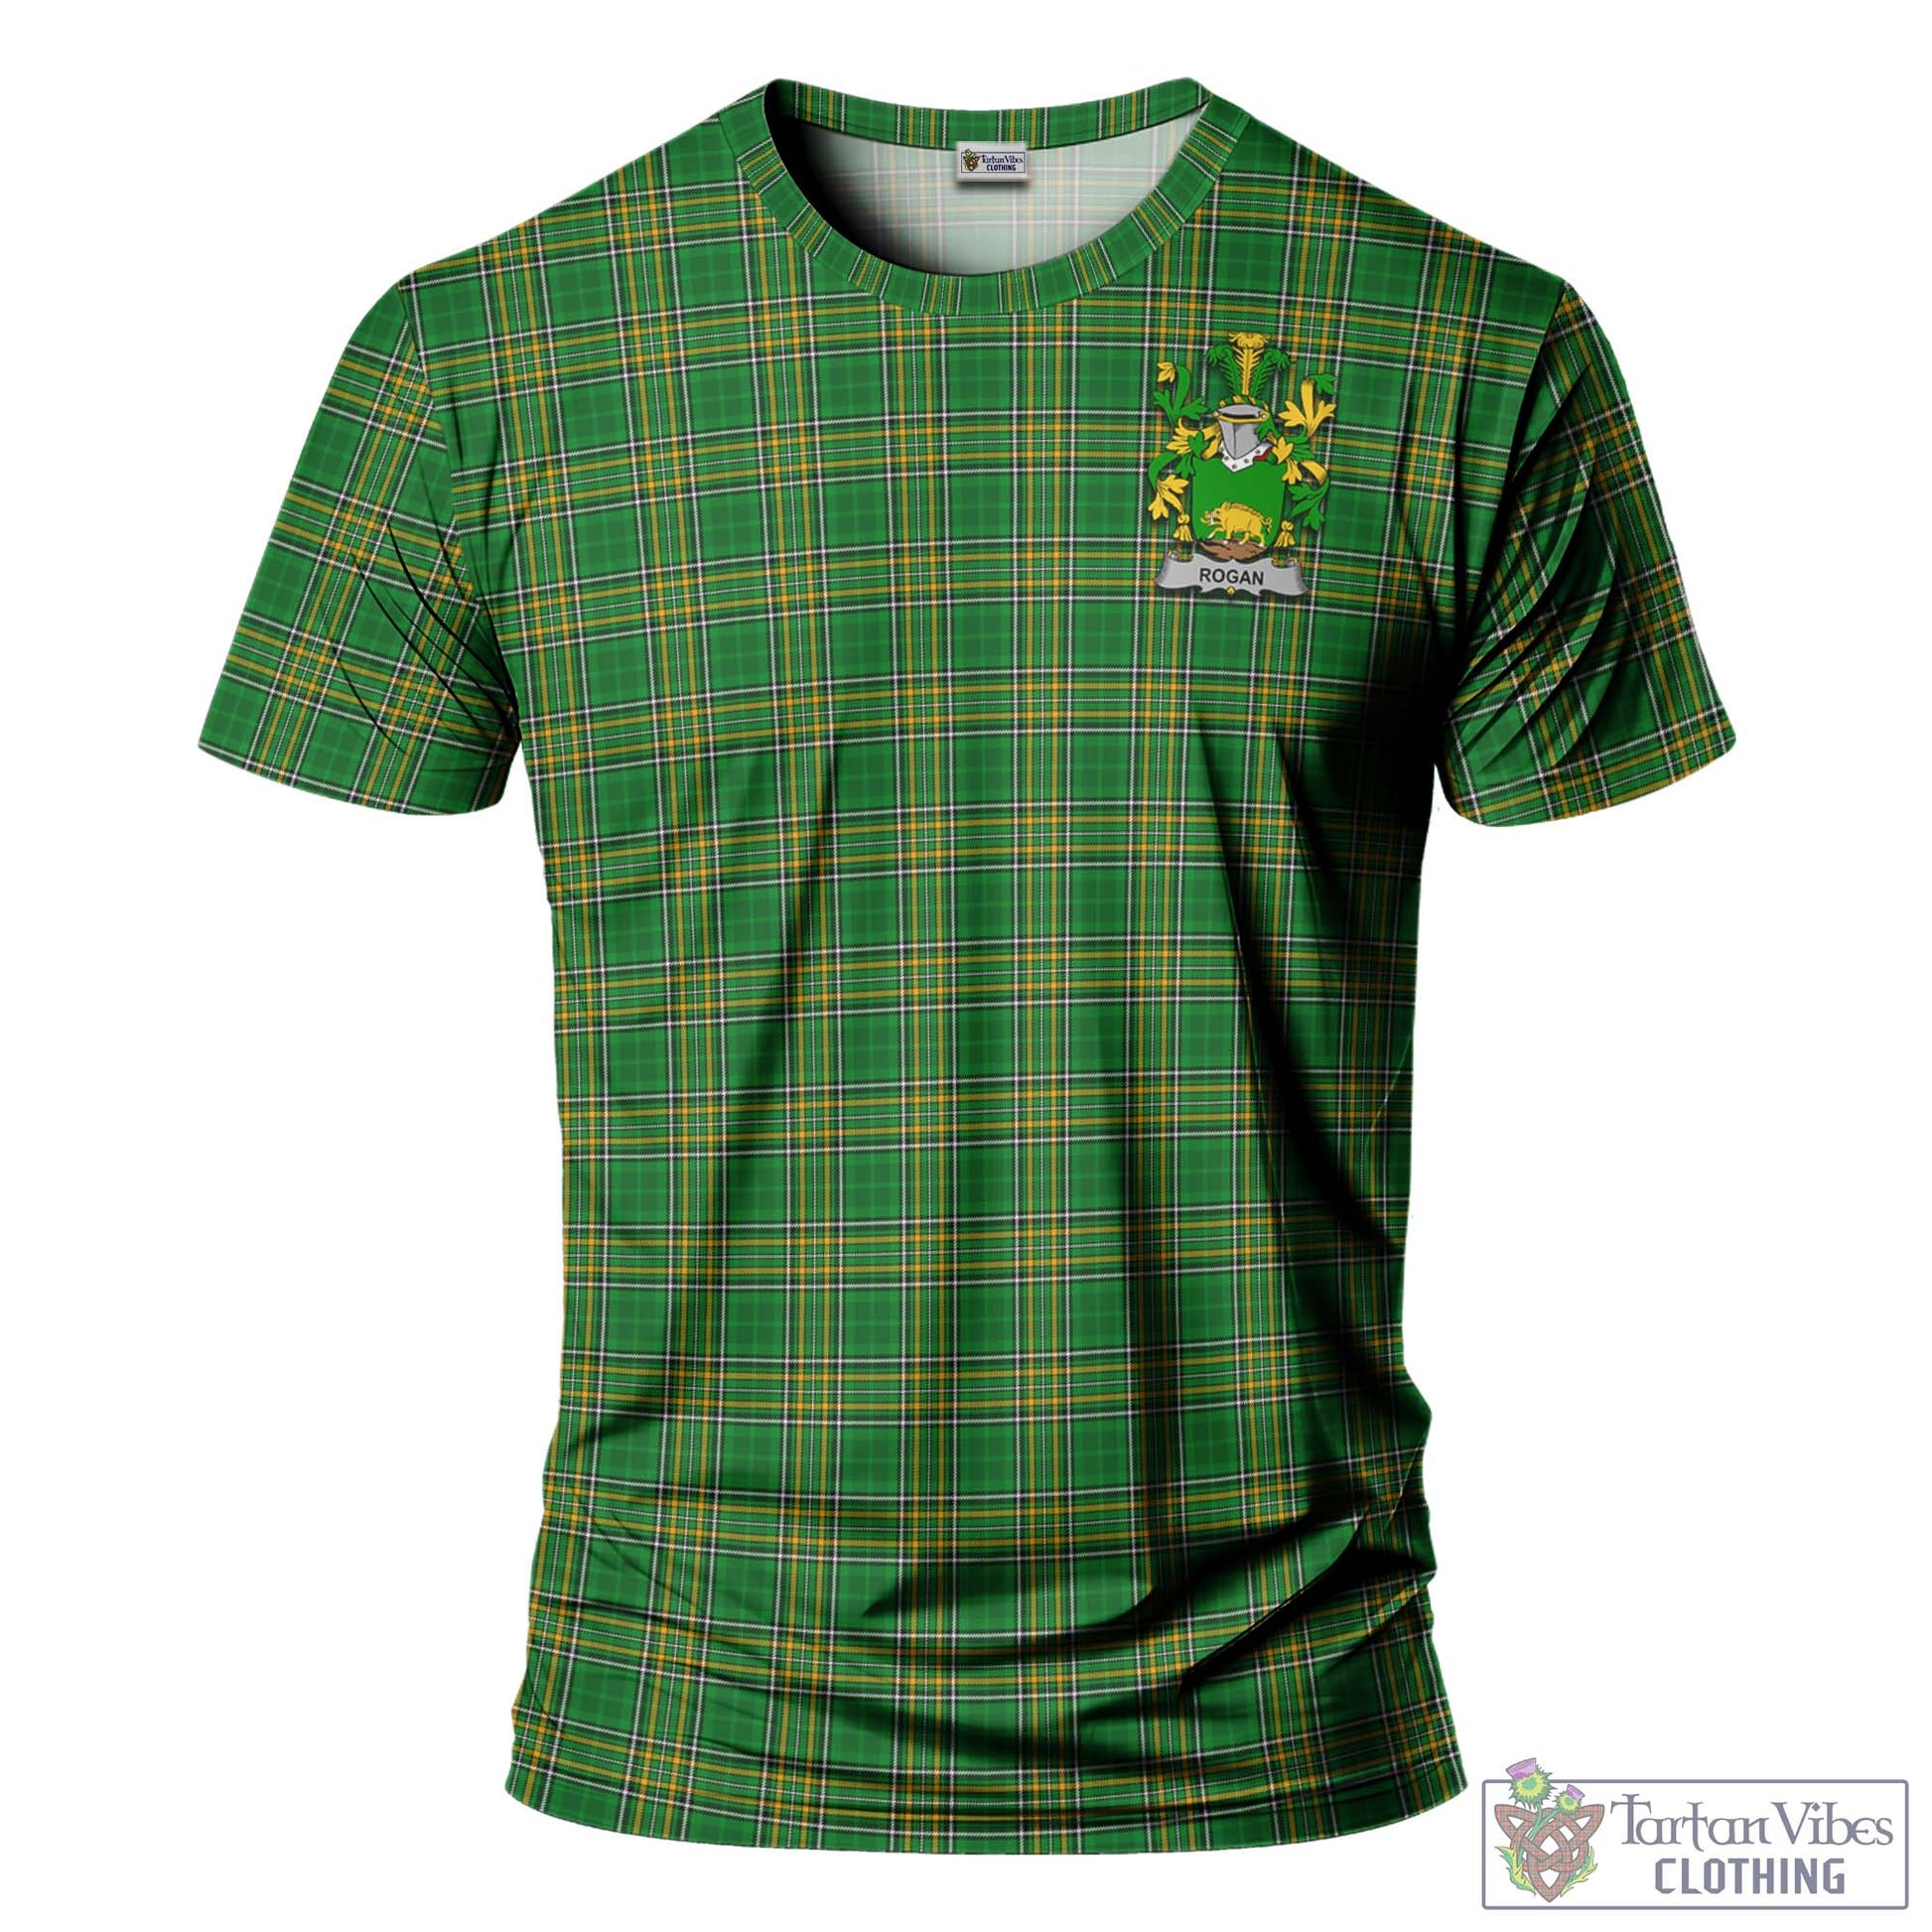 Tartan Vibes Clothing Rogan Ireland Clan Tartan T-Shirt with Family Seal